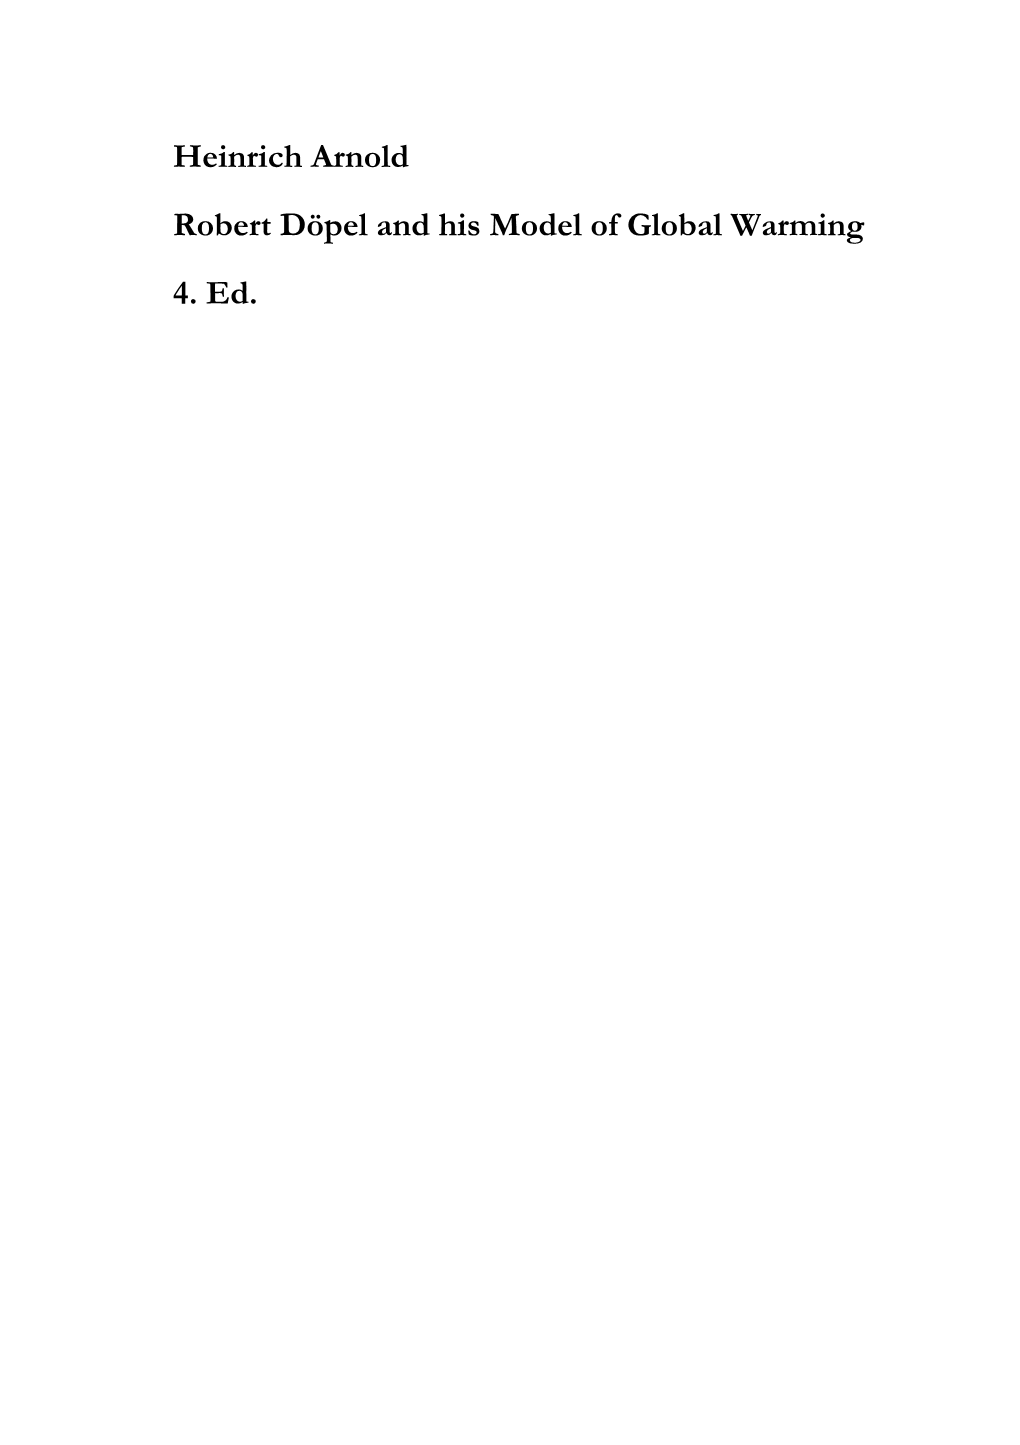 Robert Döpel and His Model of Global Warming